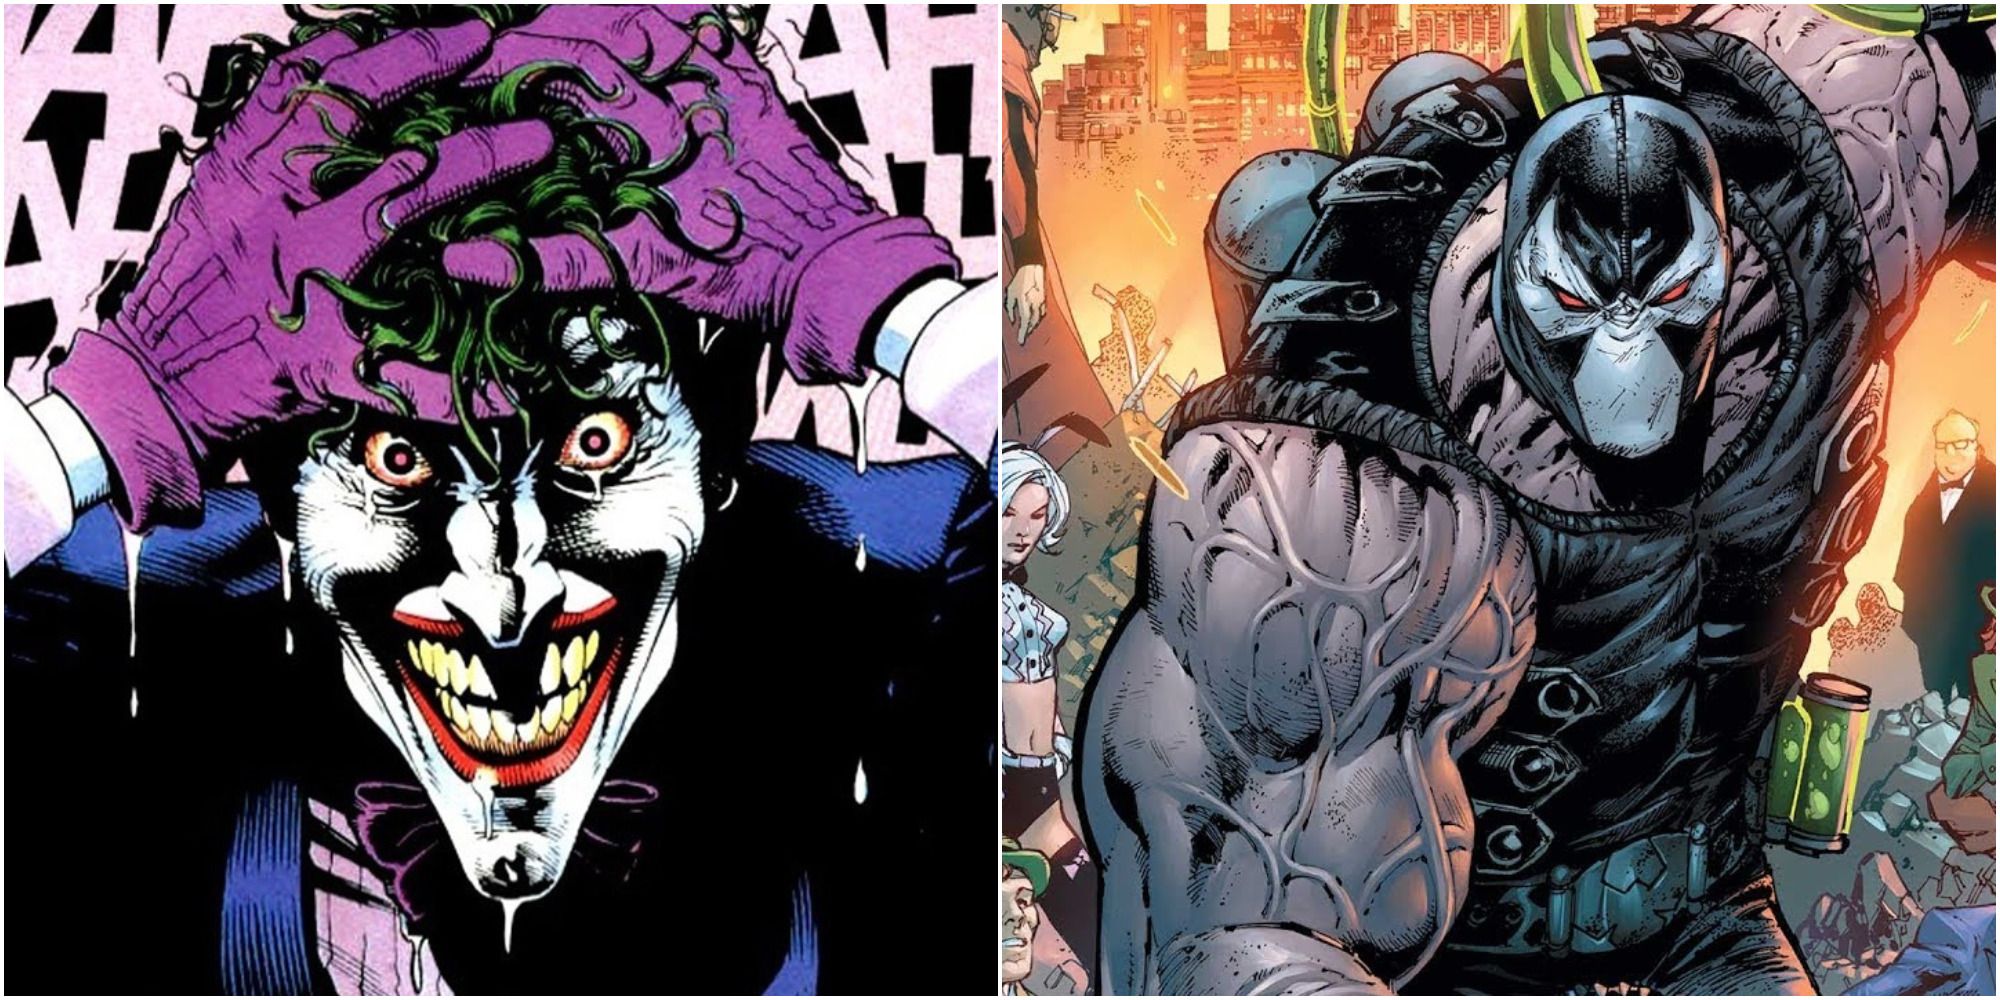 Joker and Bane